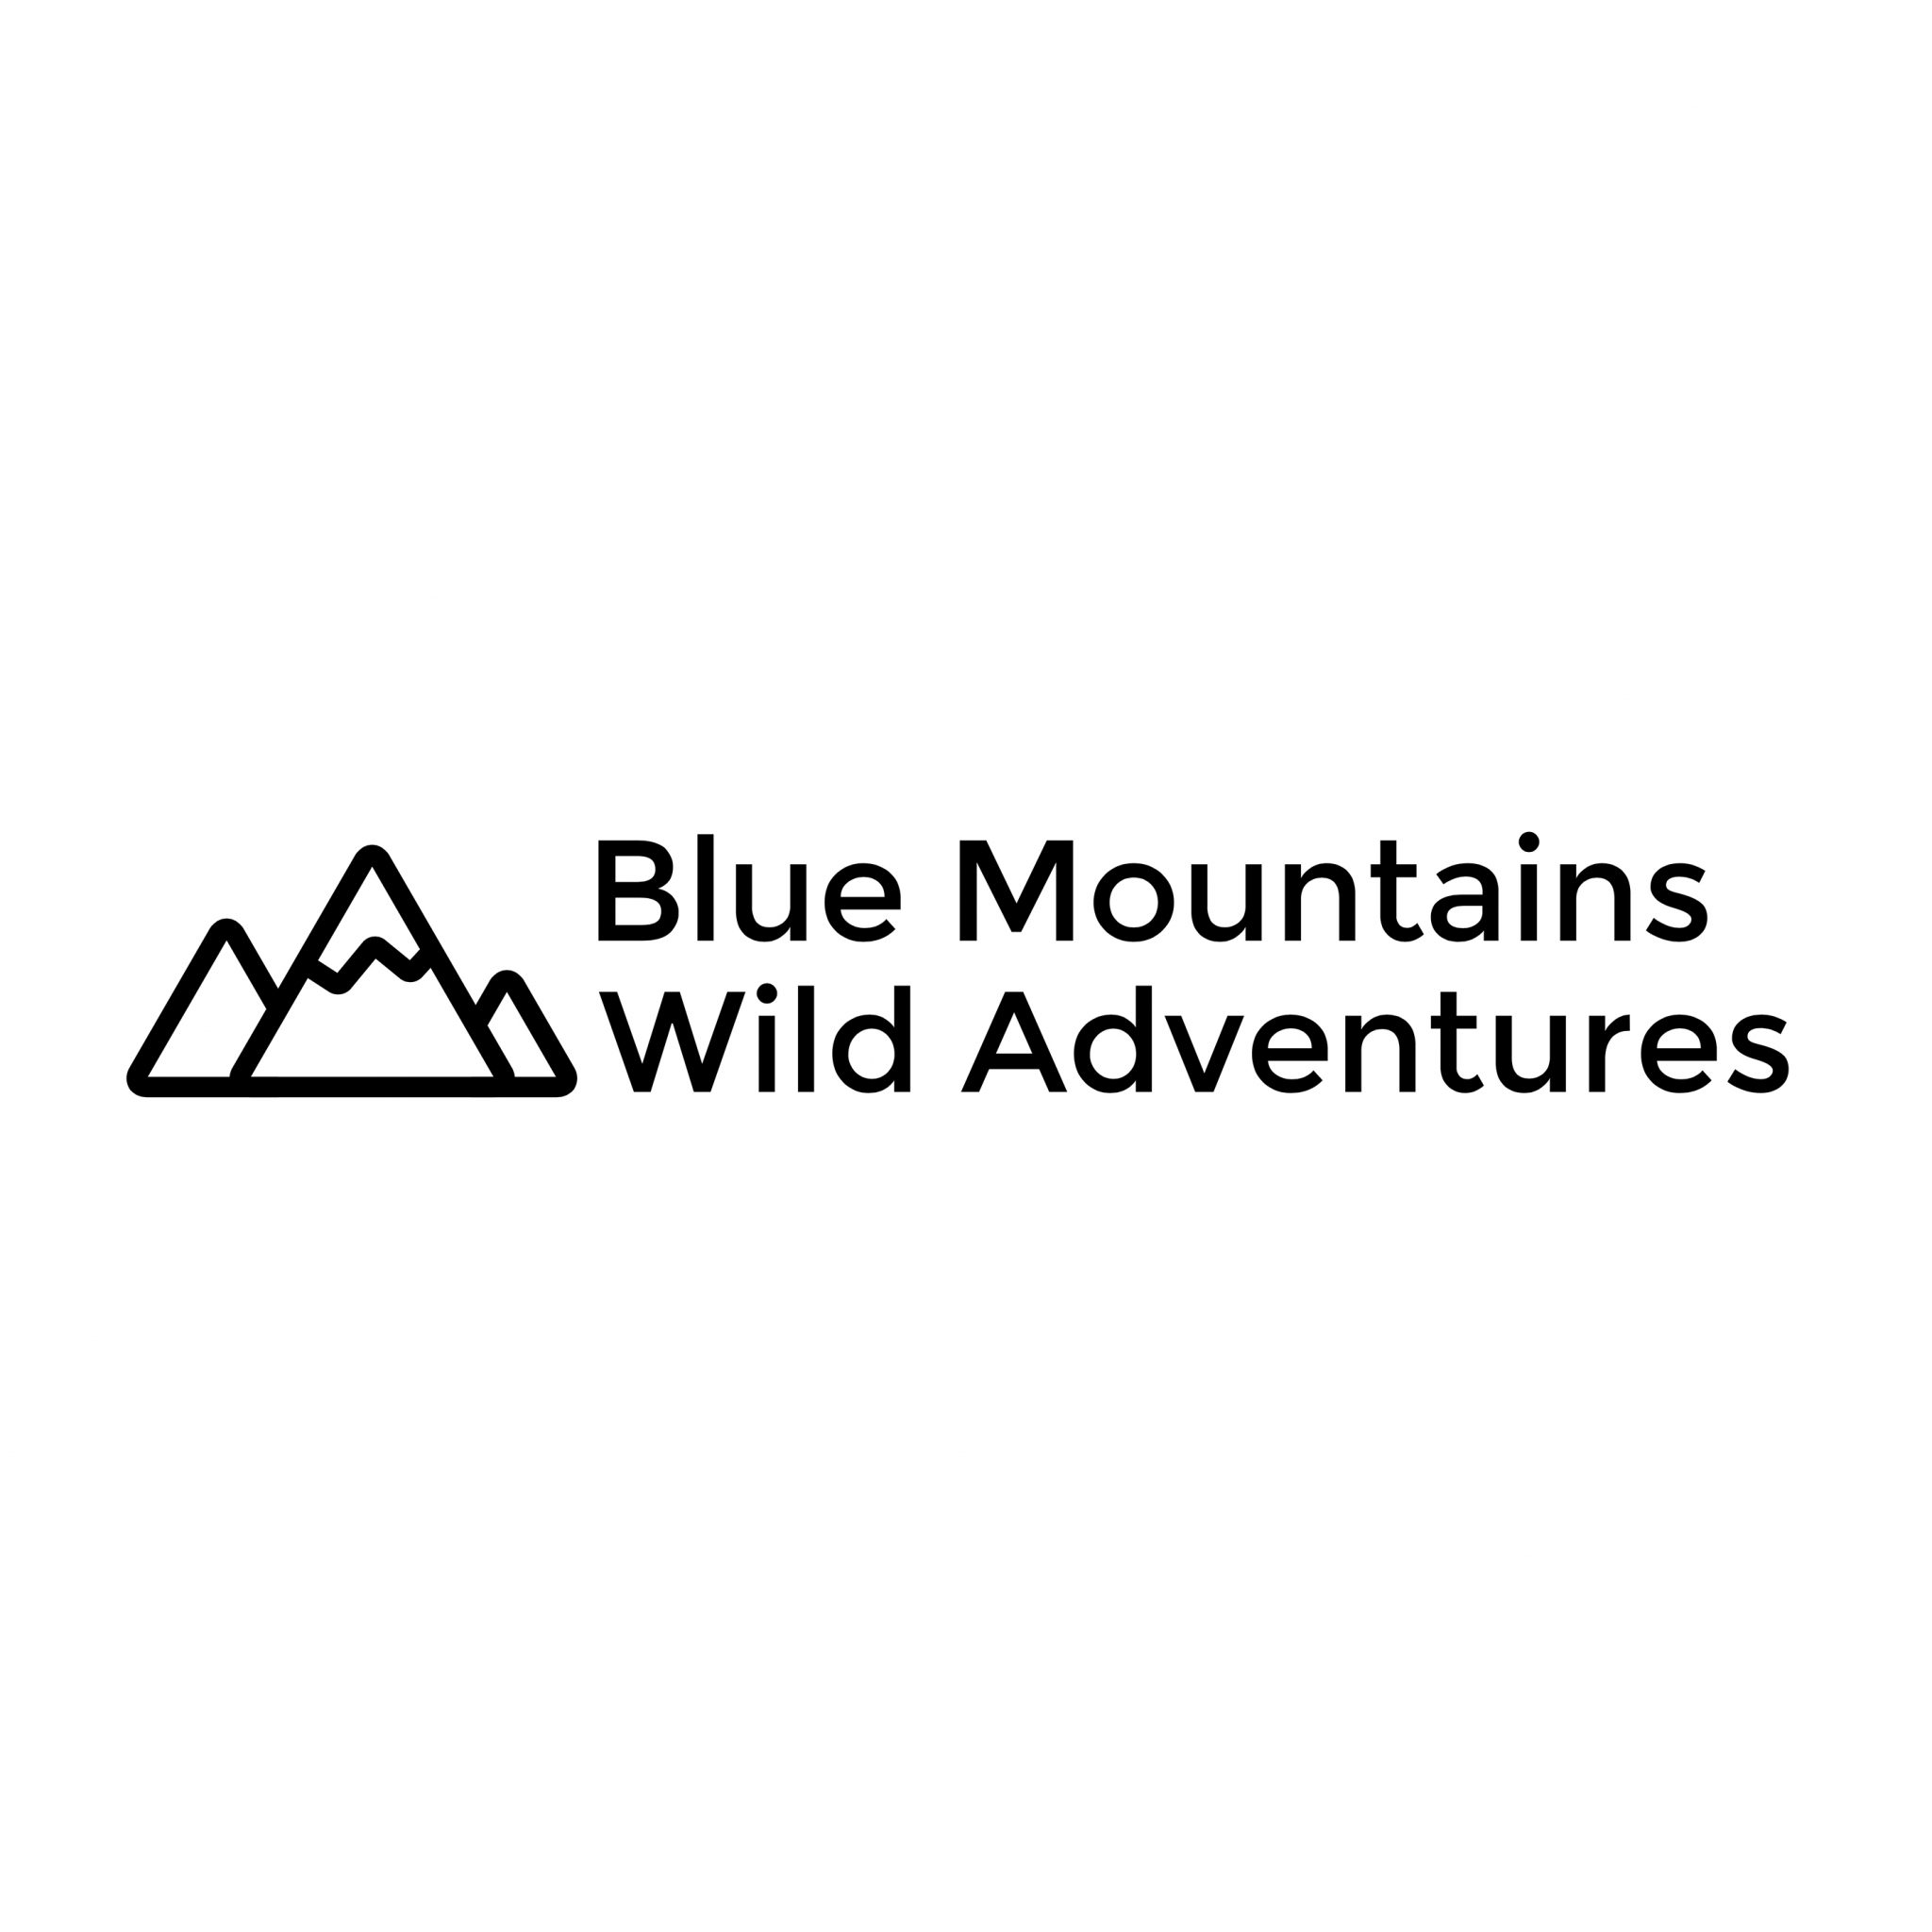 Blue Mountains Wild Adventures